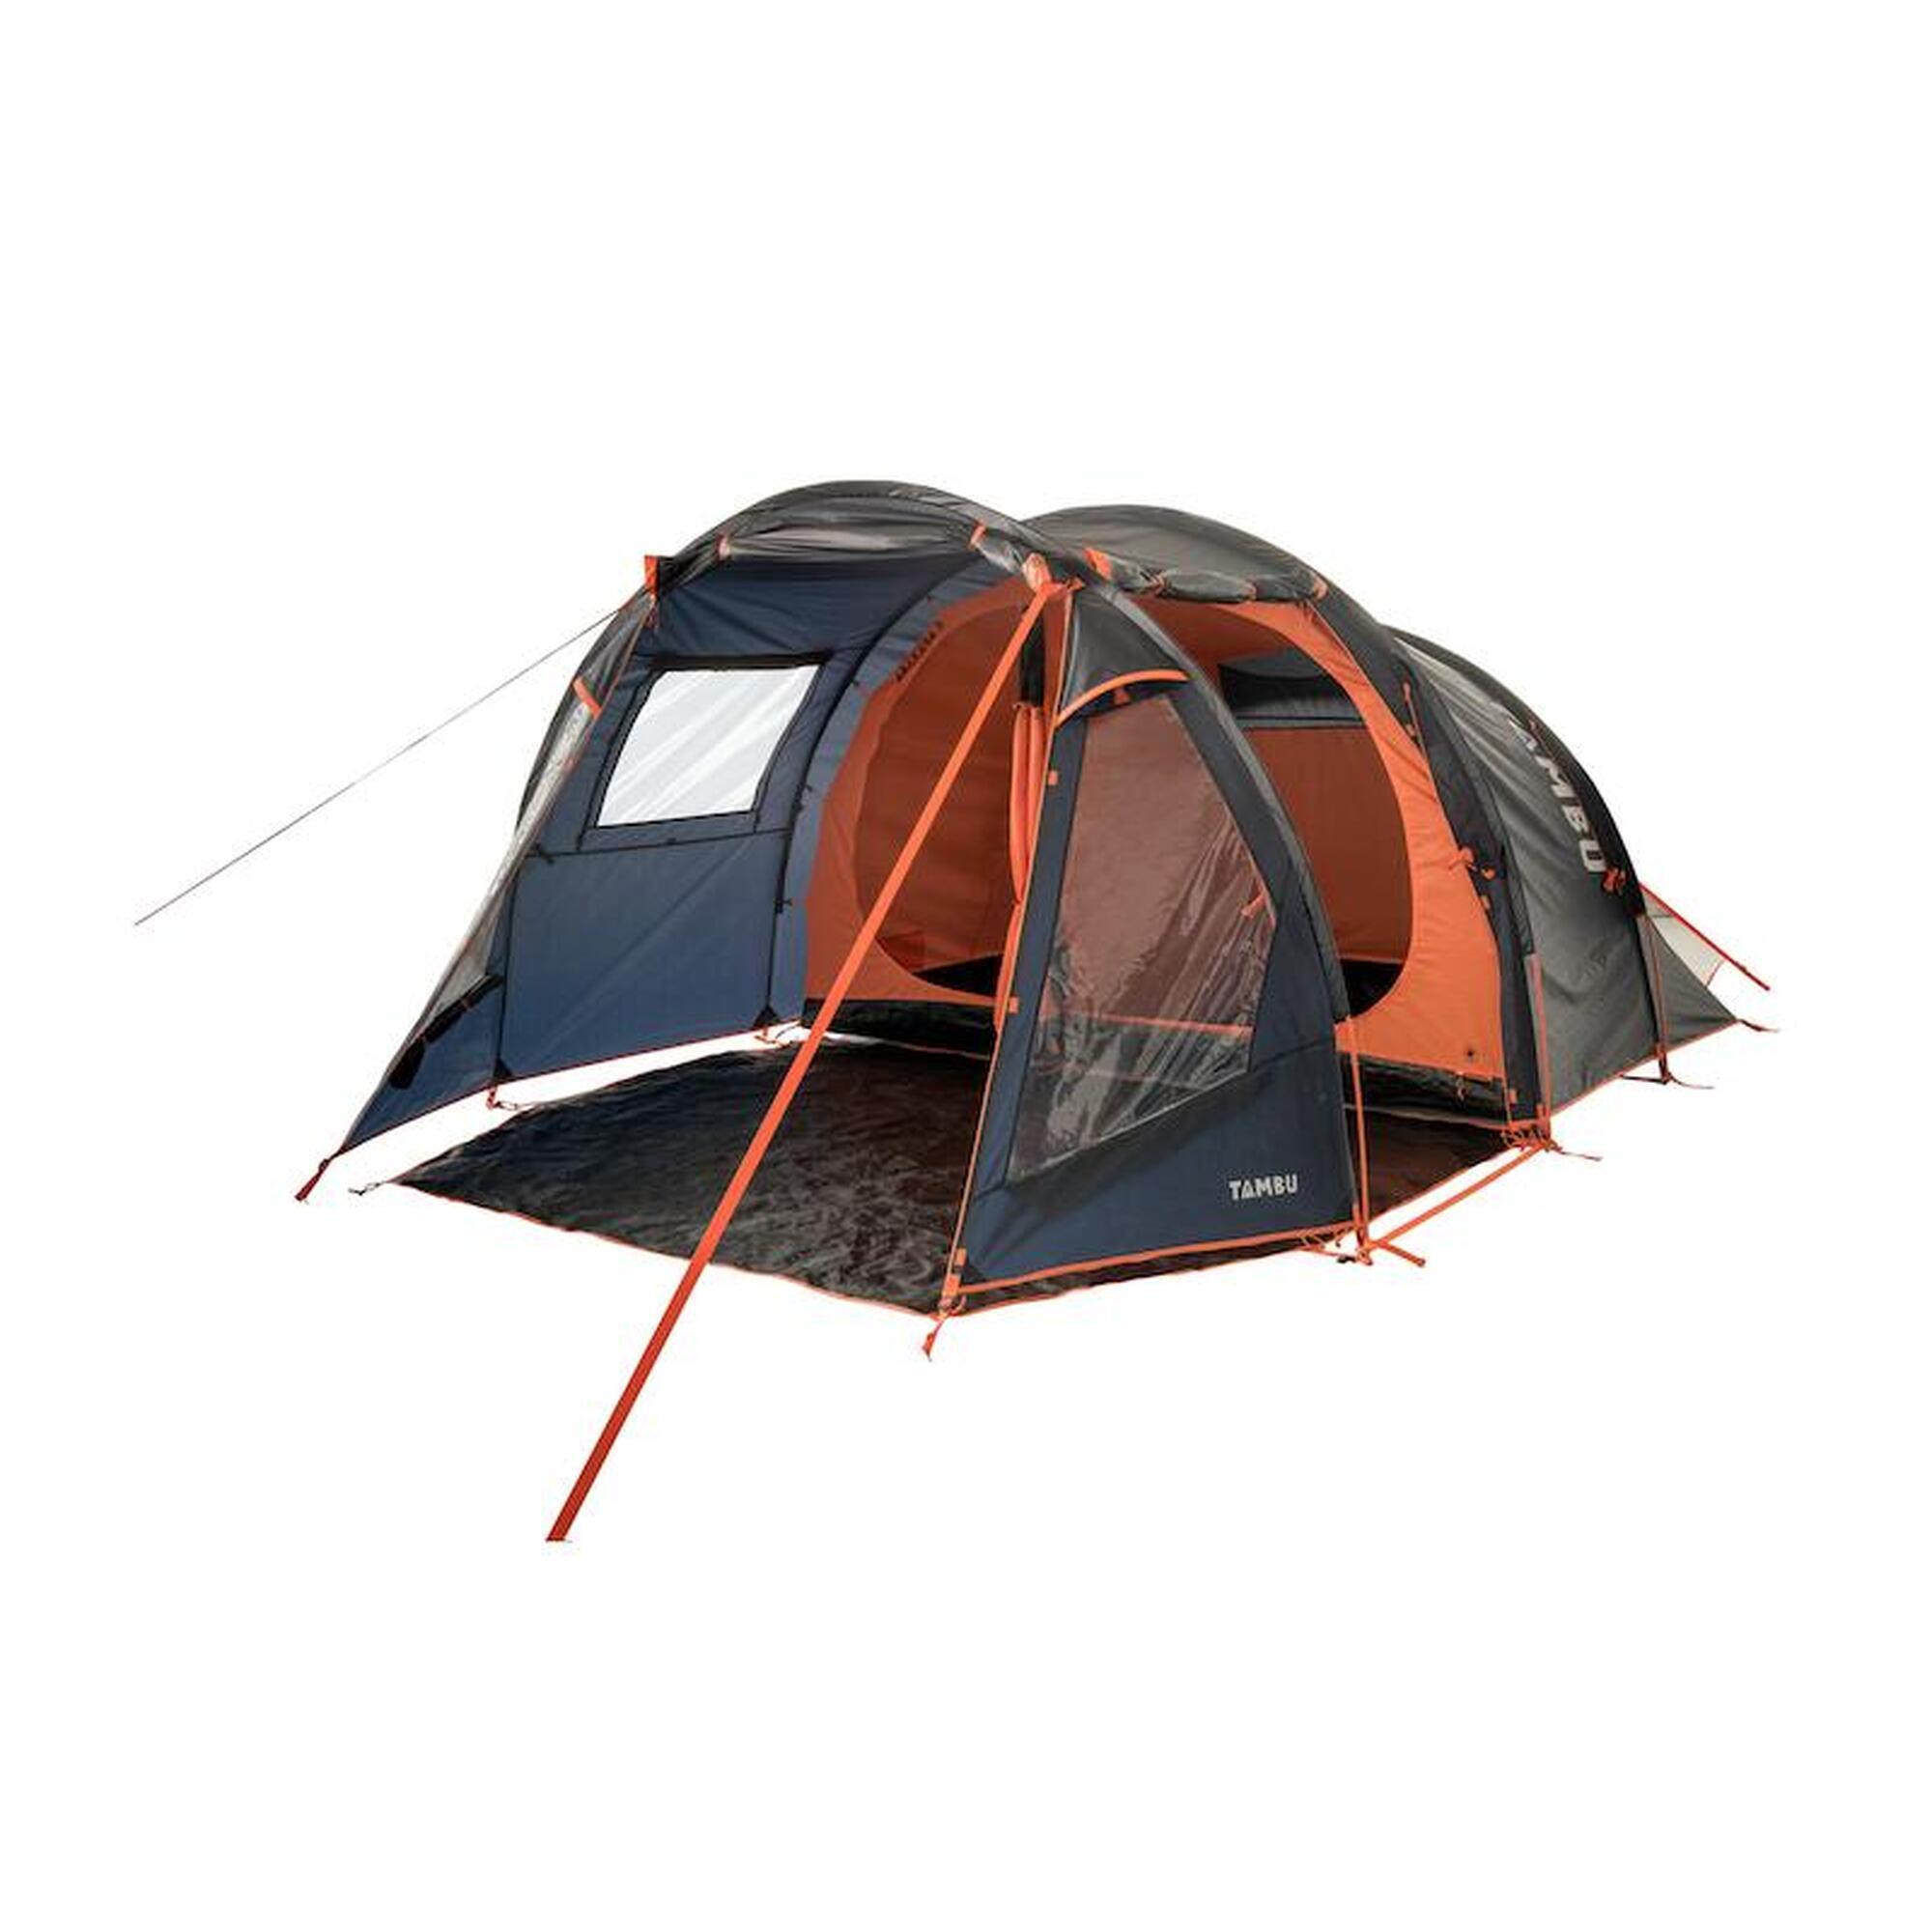 Tunnelzelt TAMBU Abakasa 5 Personen Camping Zelt in Stehhöhe mit Vorbau